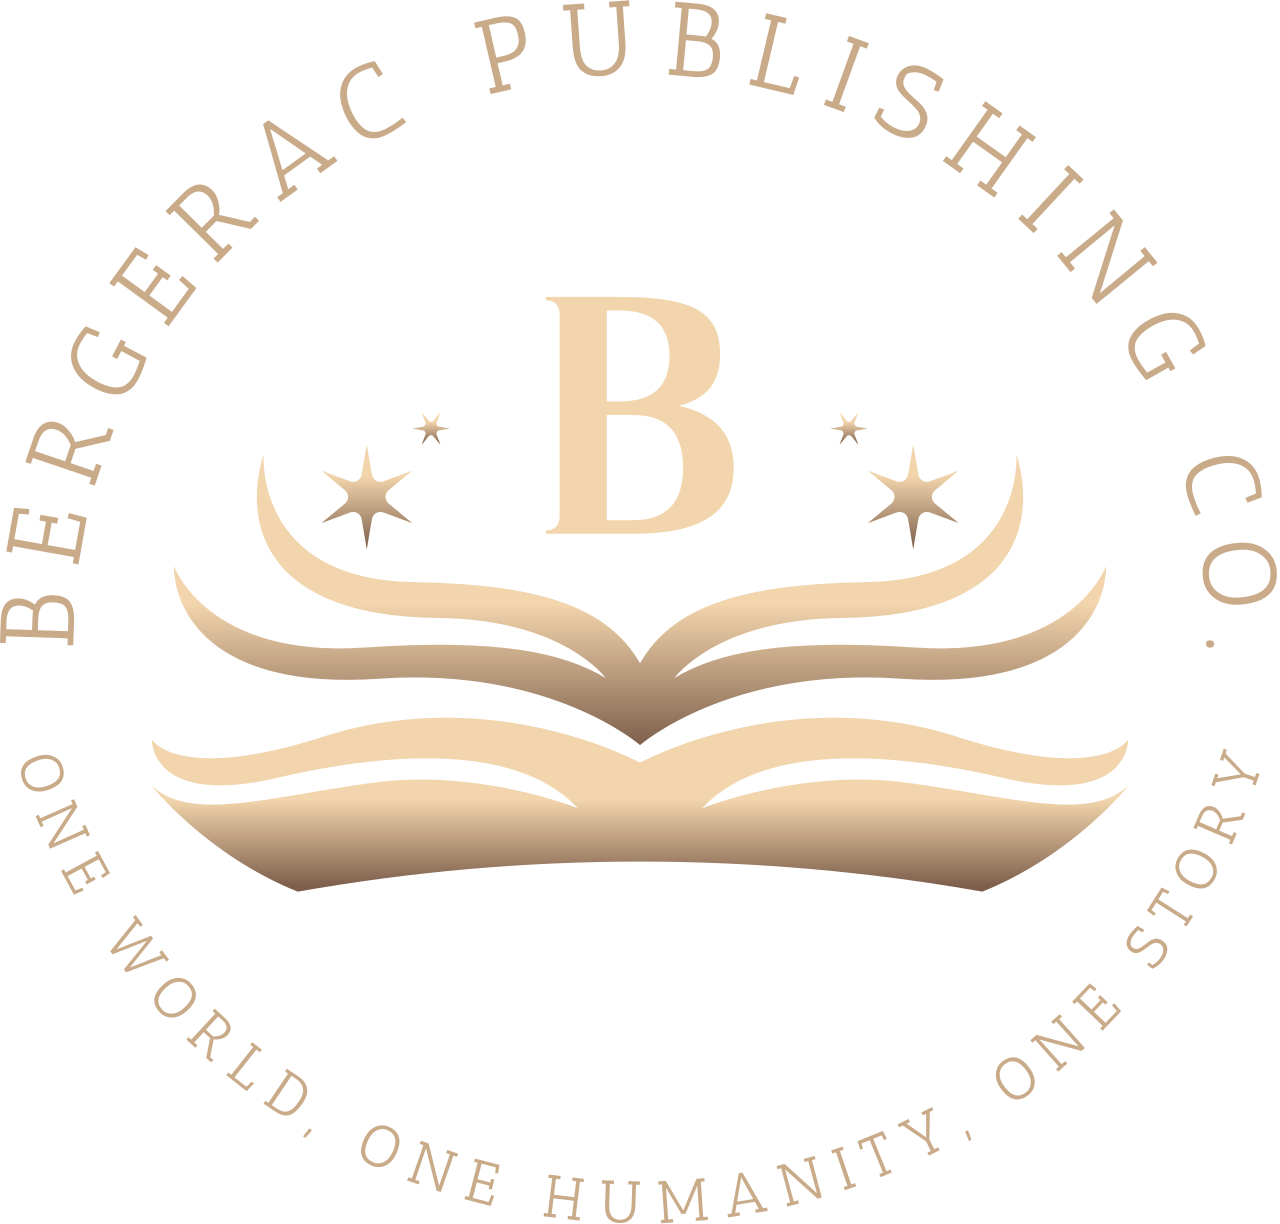 BERGERAC PUBLISHING CO.'s logo